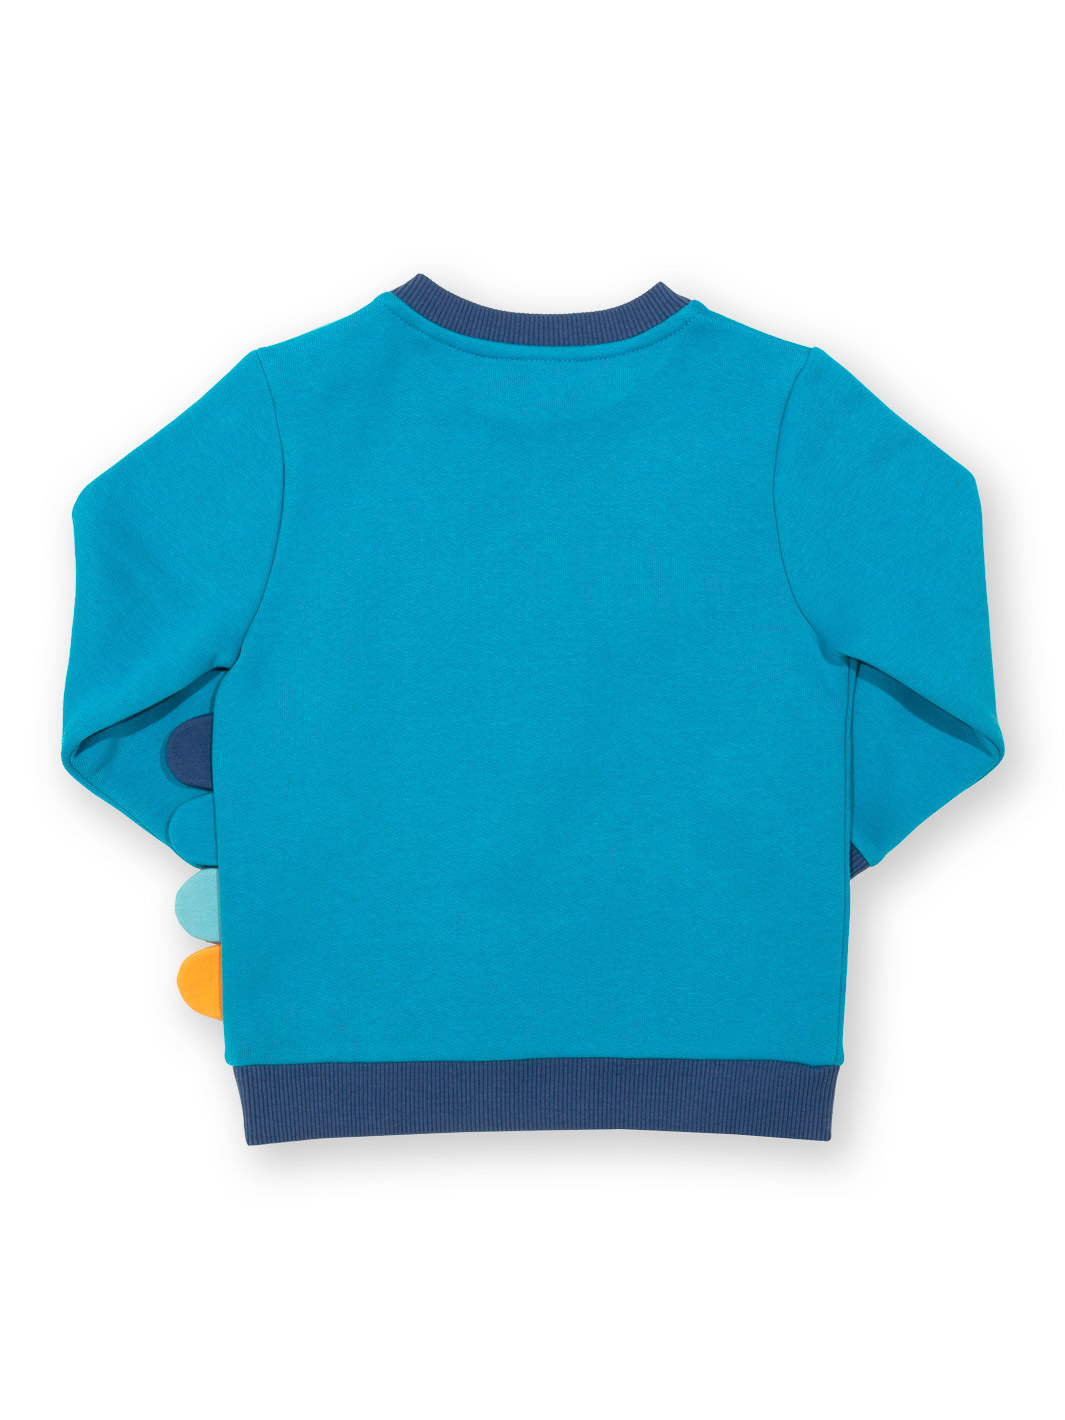 Sweatshirt Dino blau von Kite Clothing